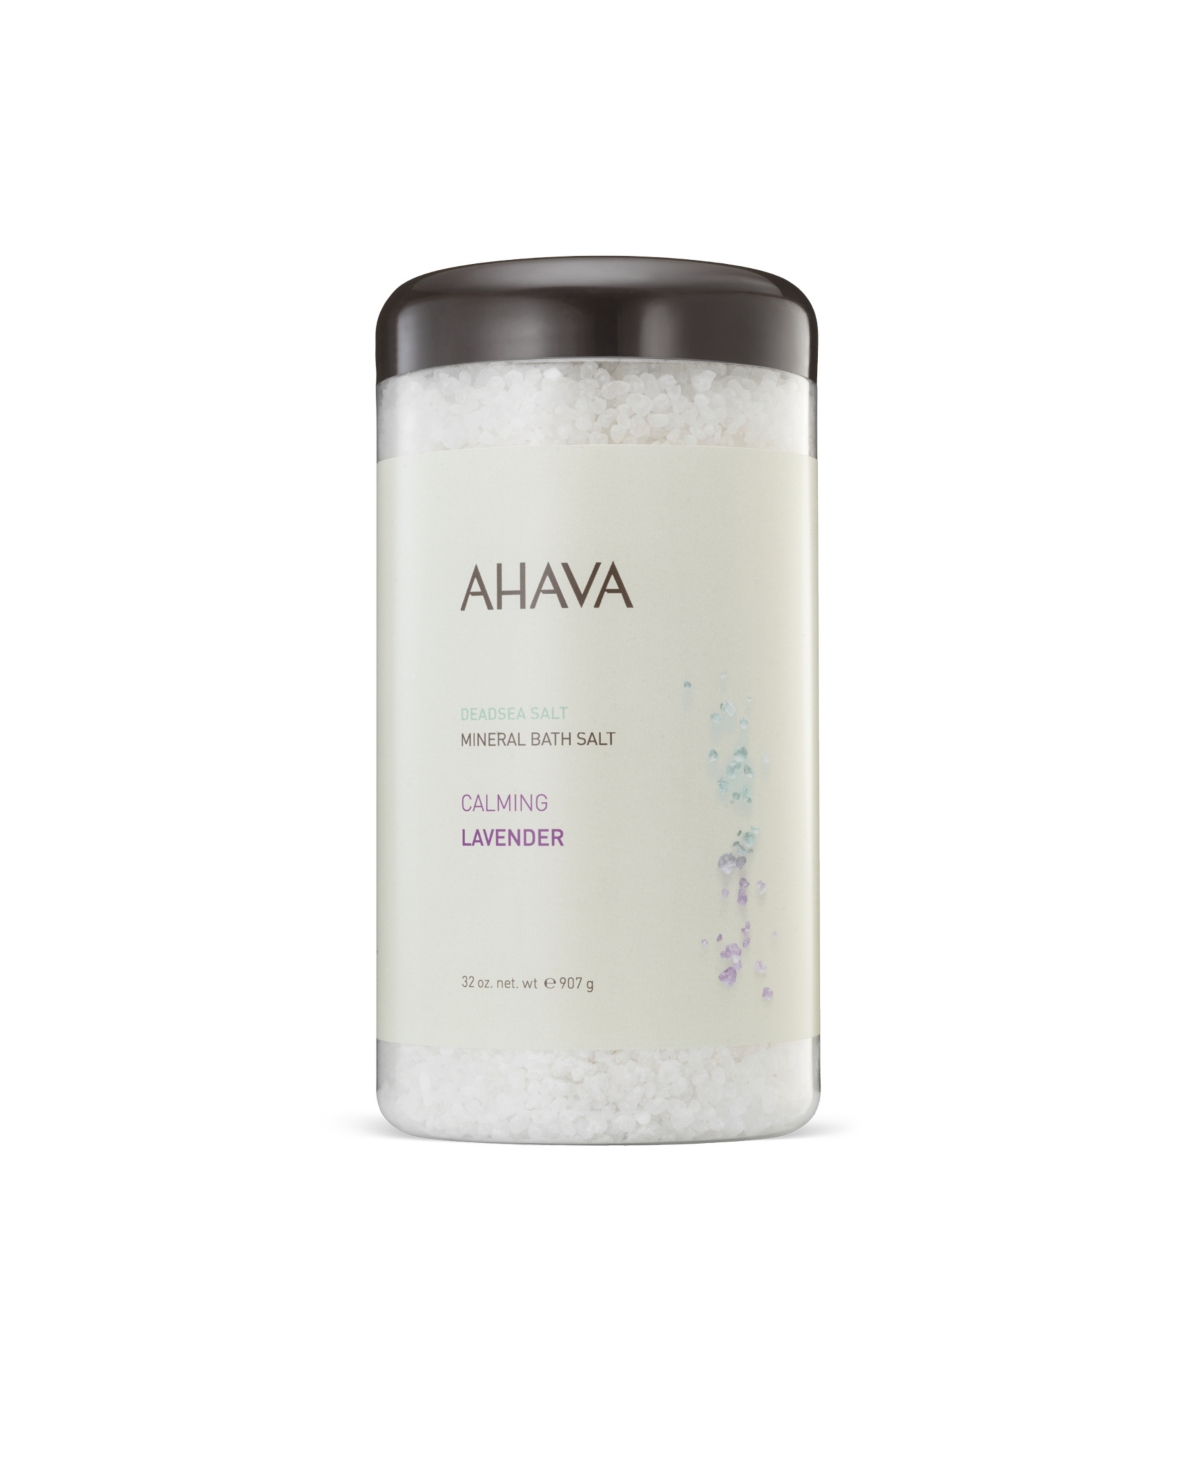 Ahava Mineral Bath Salt Calming Lavender, 32 oz